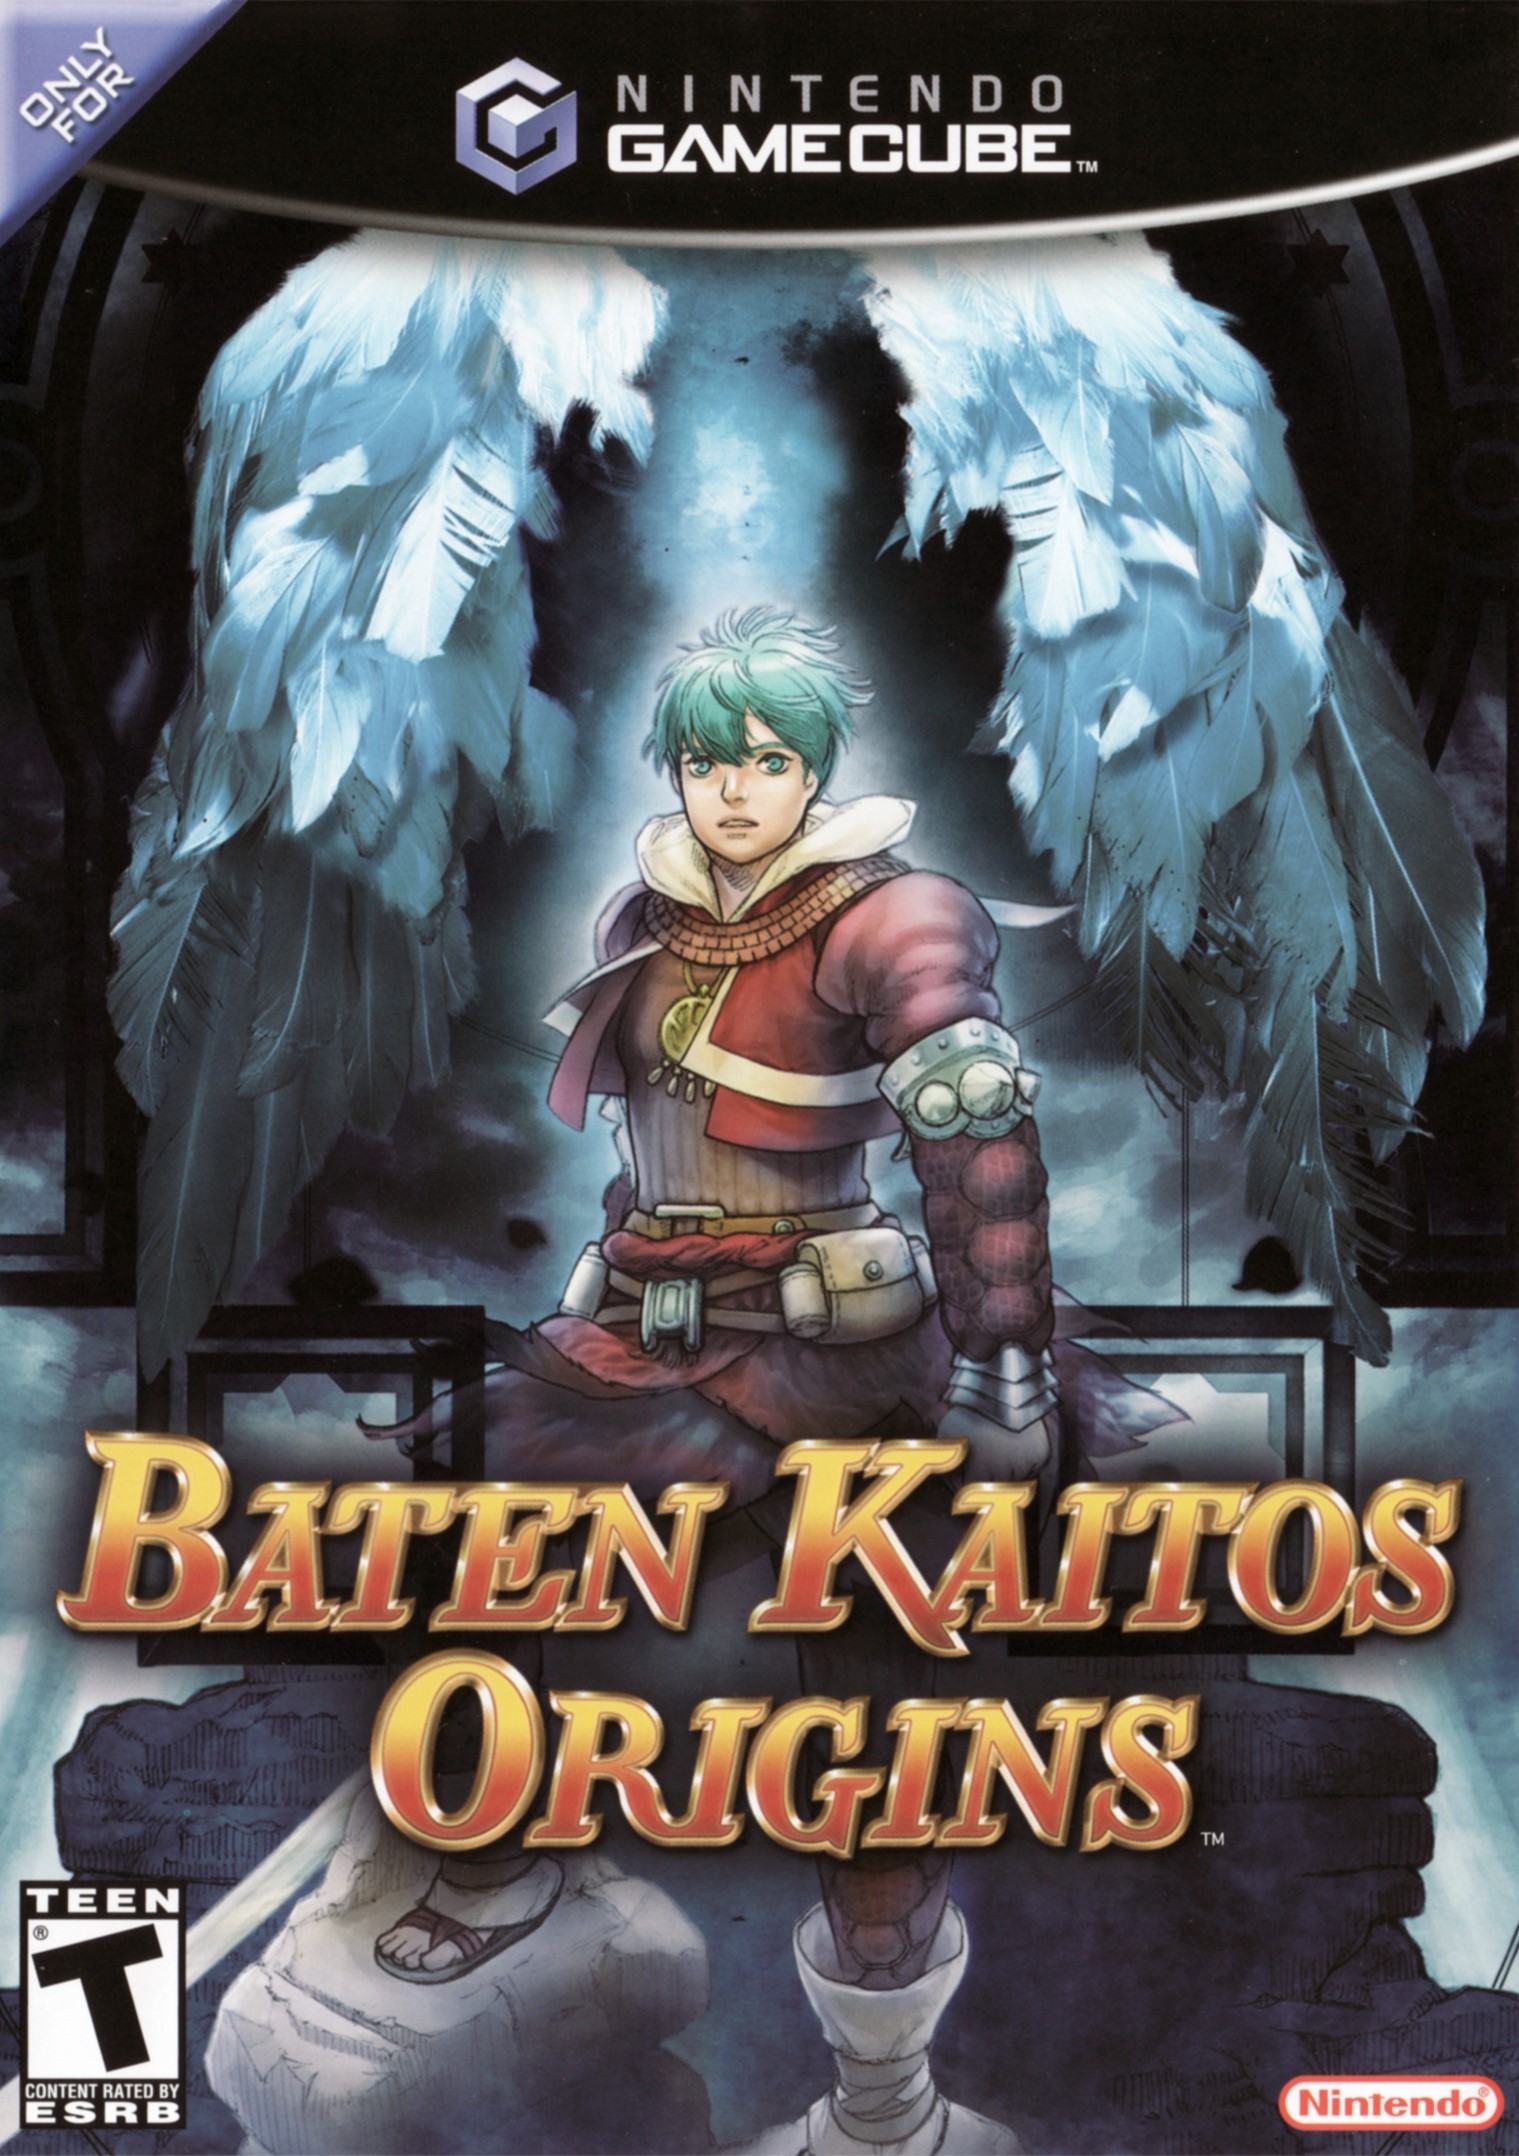 'Baten Kaitos: Origins'